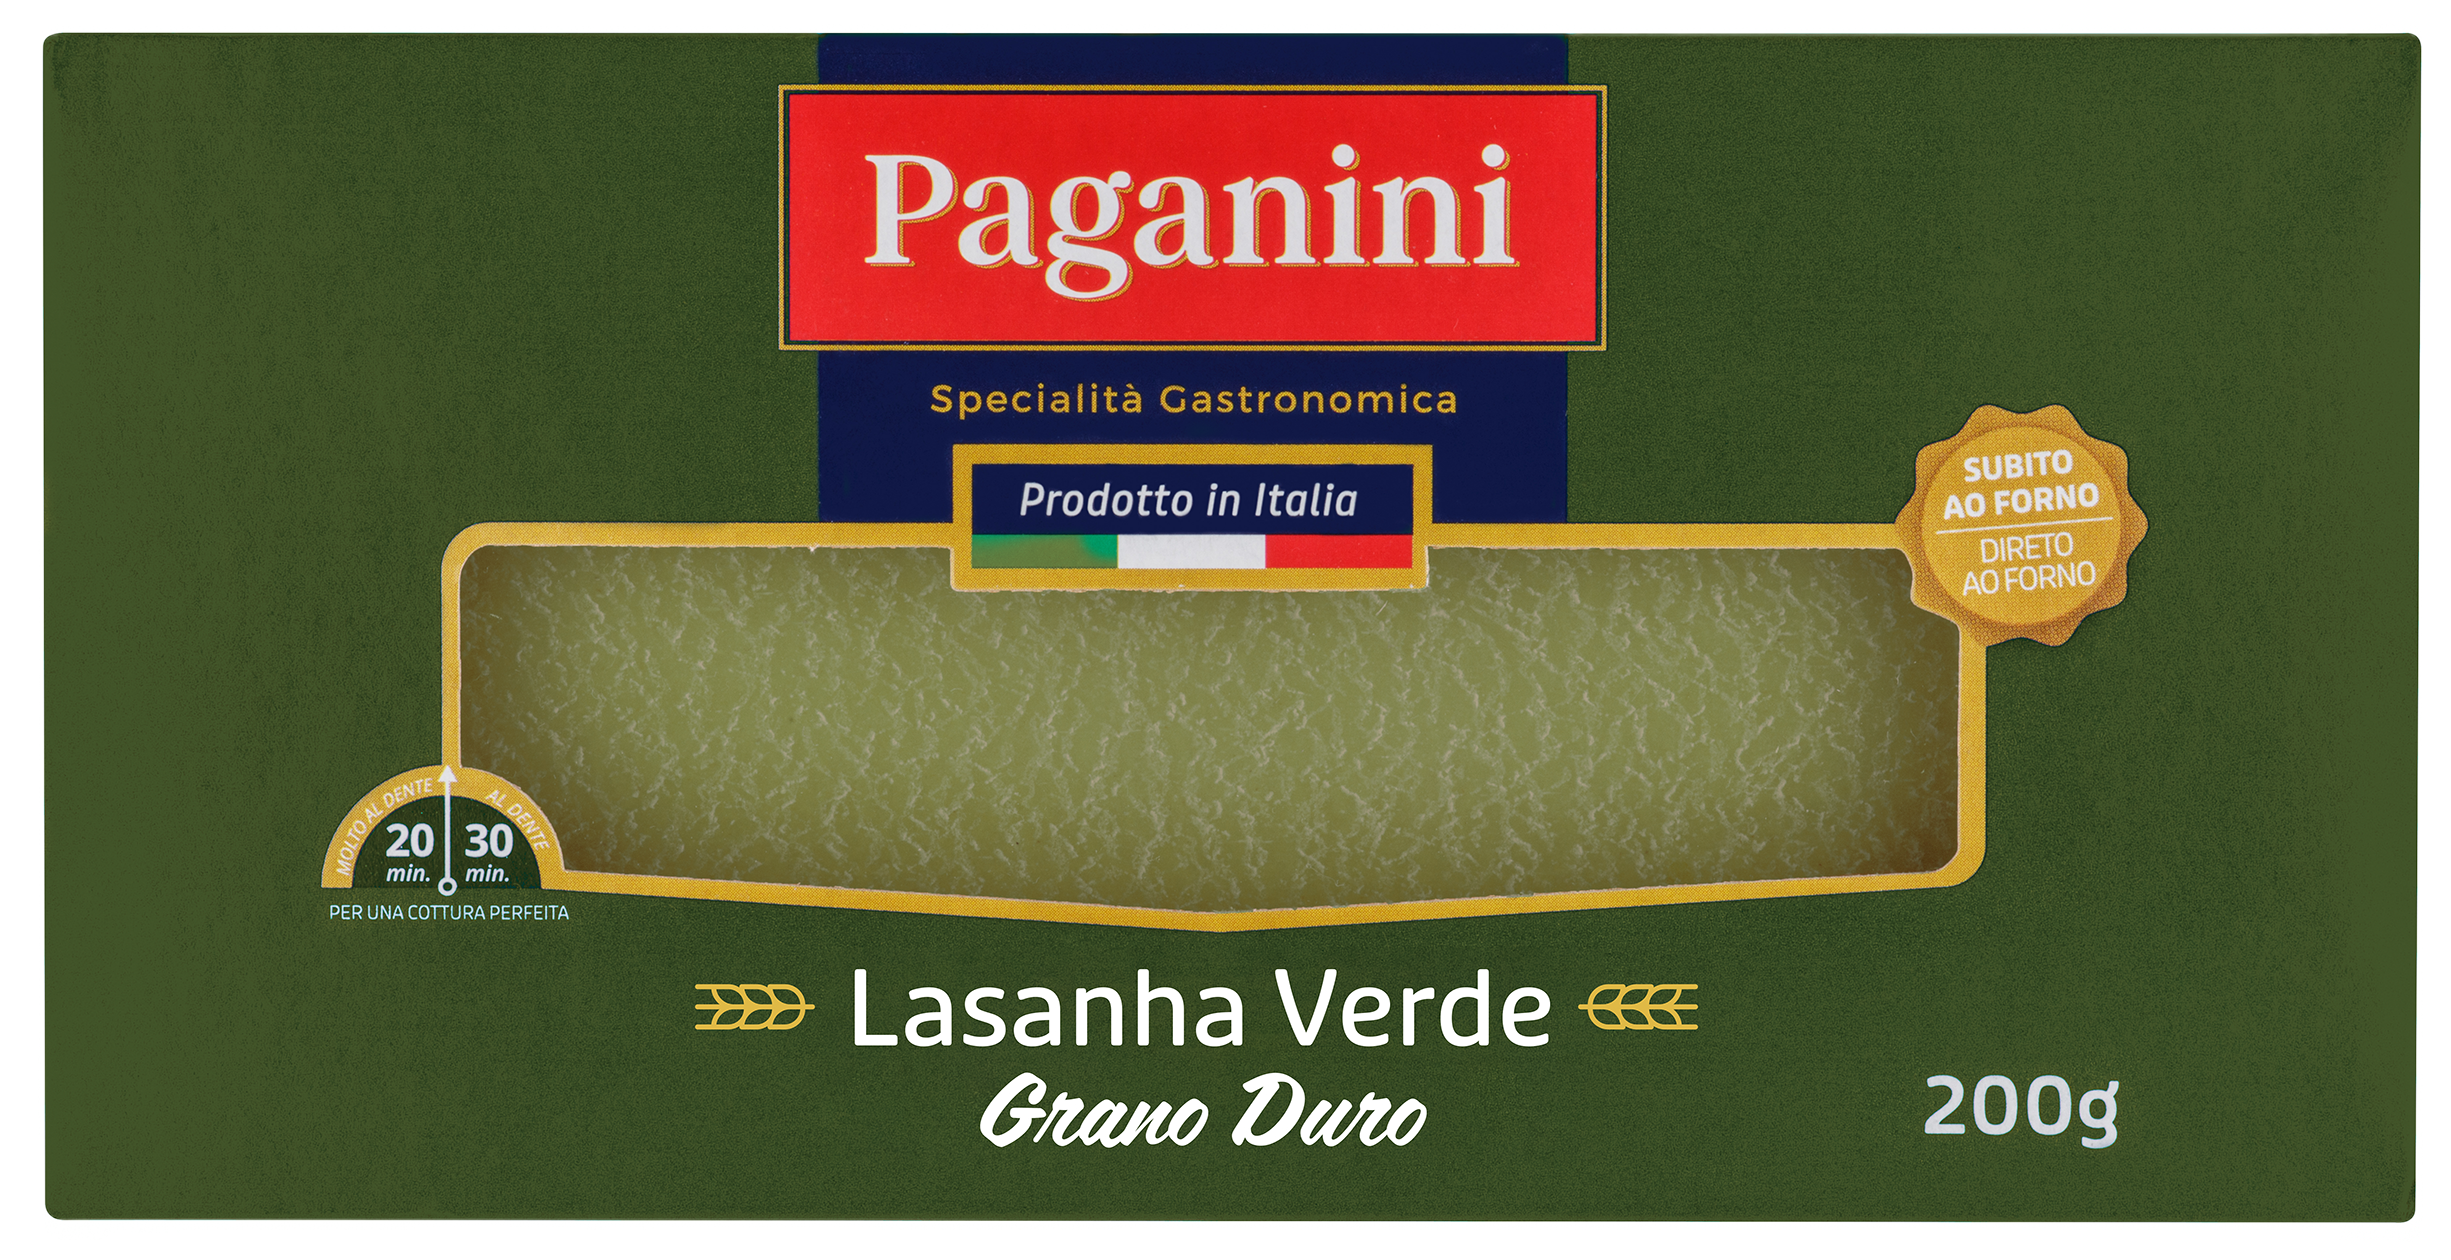 Lasanha verde Paganini